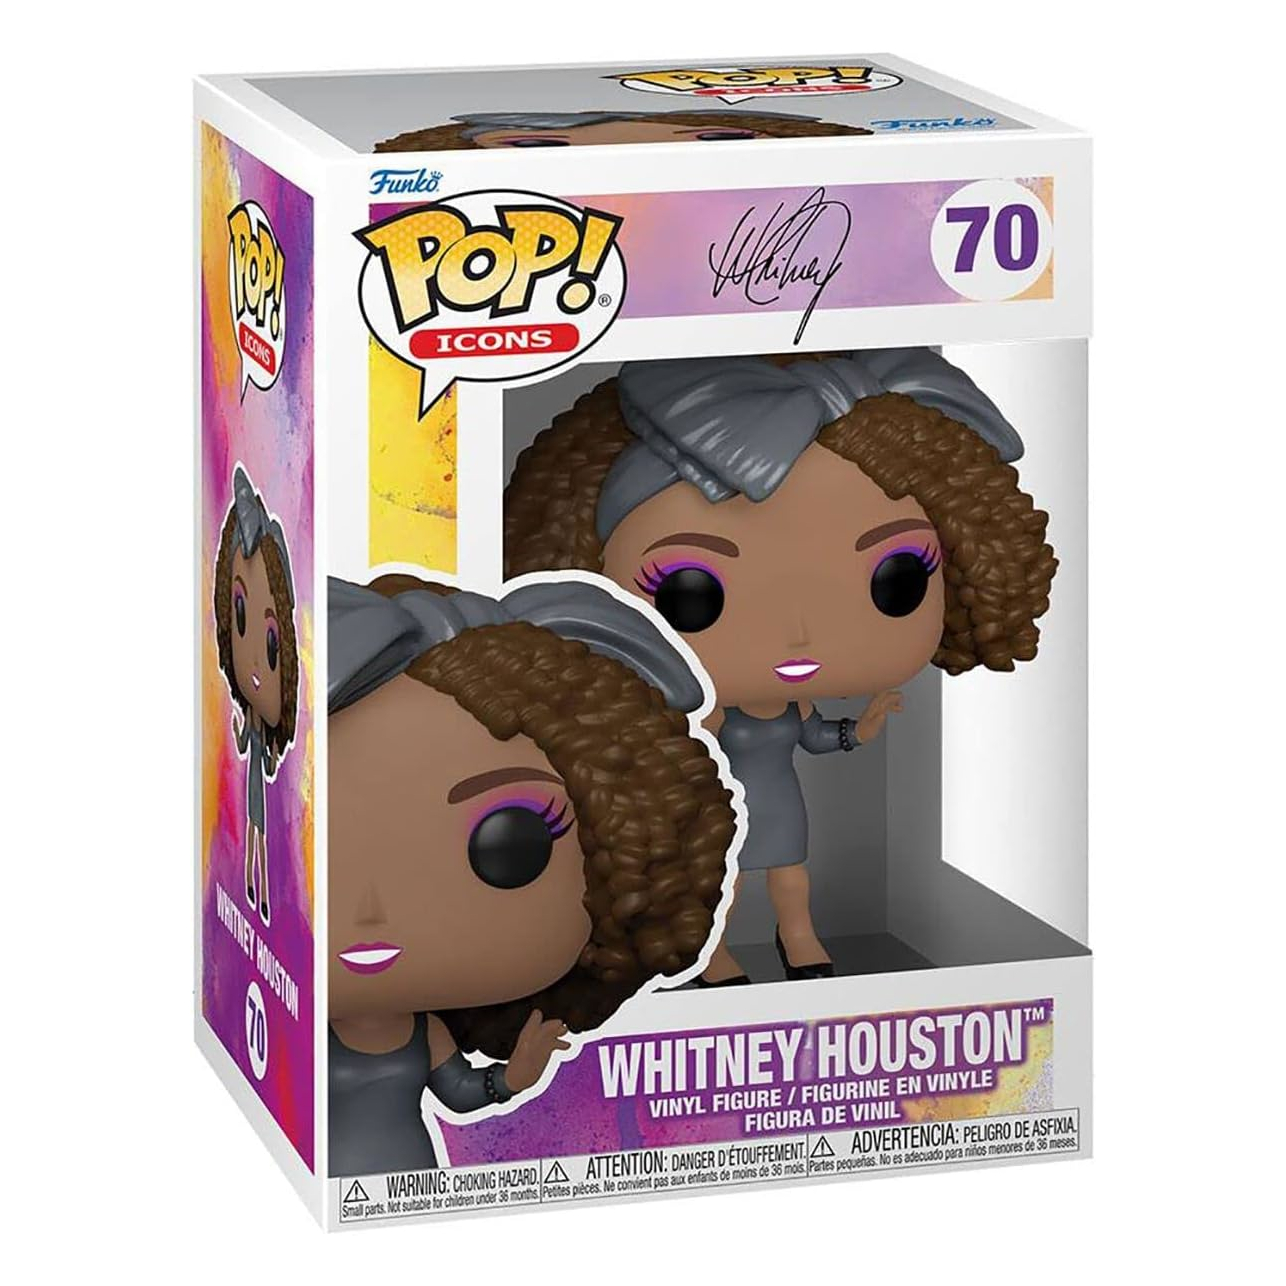 Фигурка Funko Pop! Icons Whitney Houston How Will I Know funko pop icons уитни хьюстон 60932